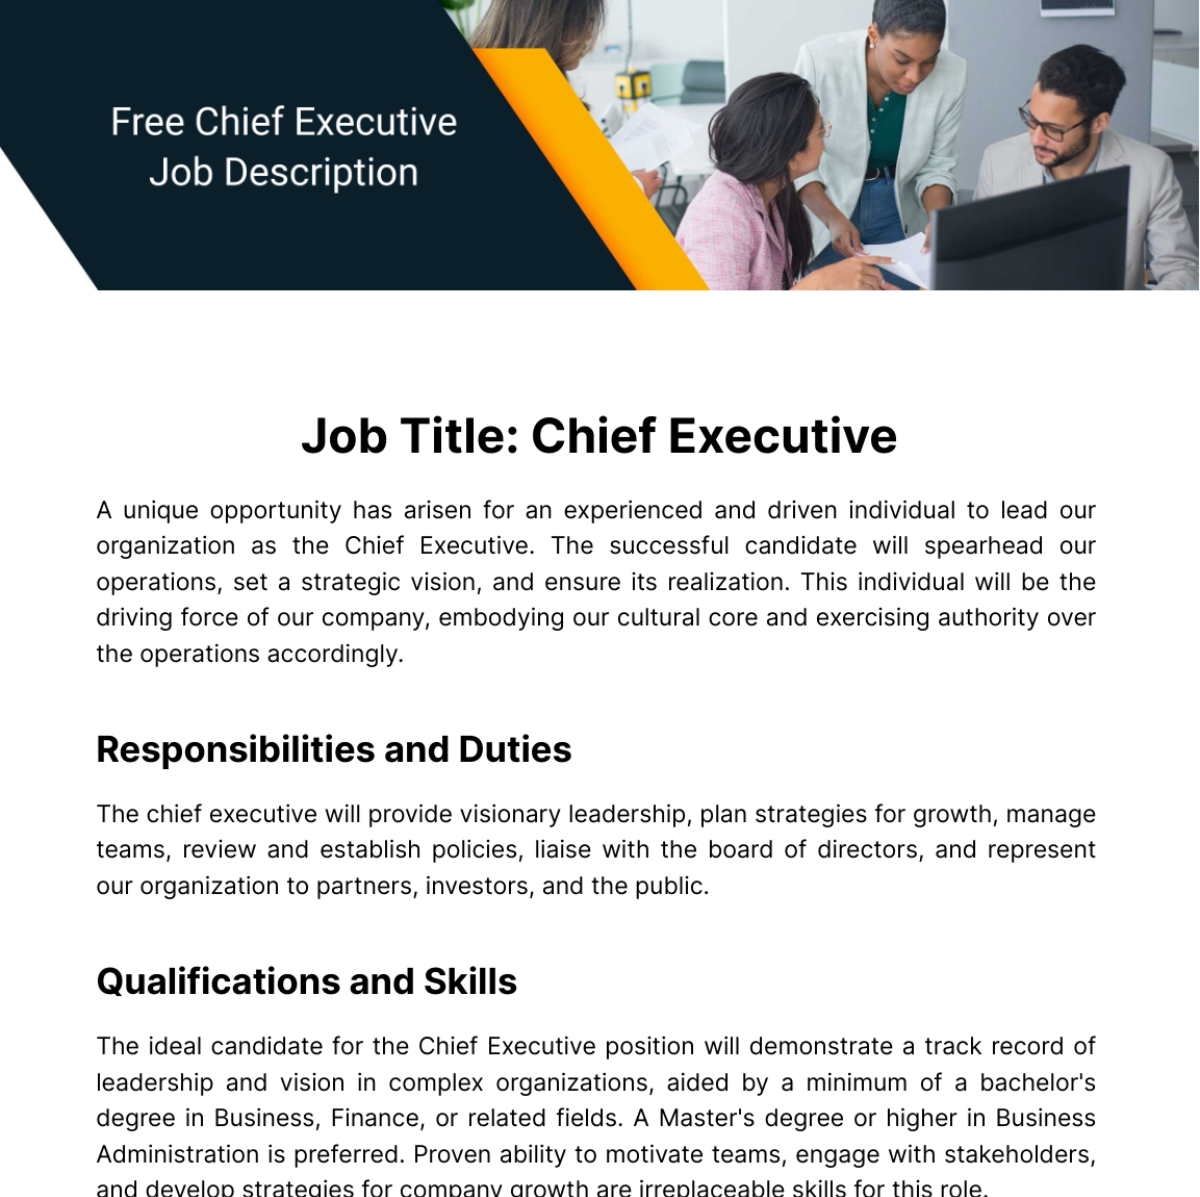 Free Chief Executive Job Description Template